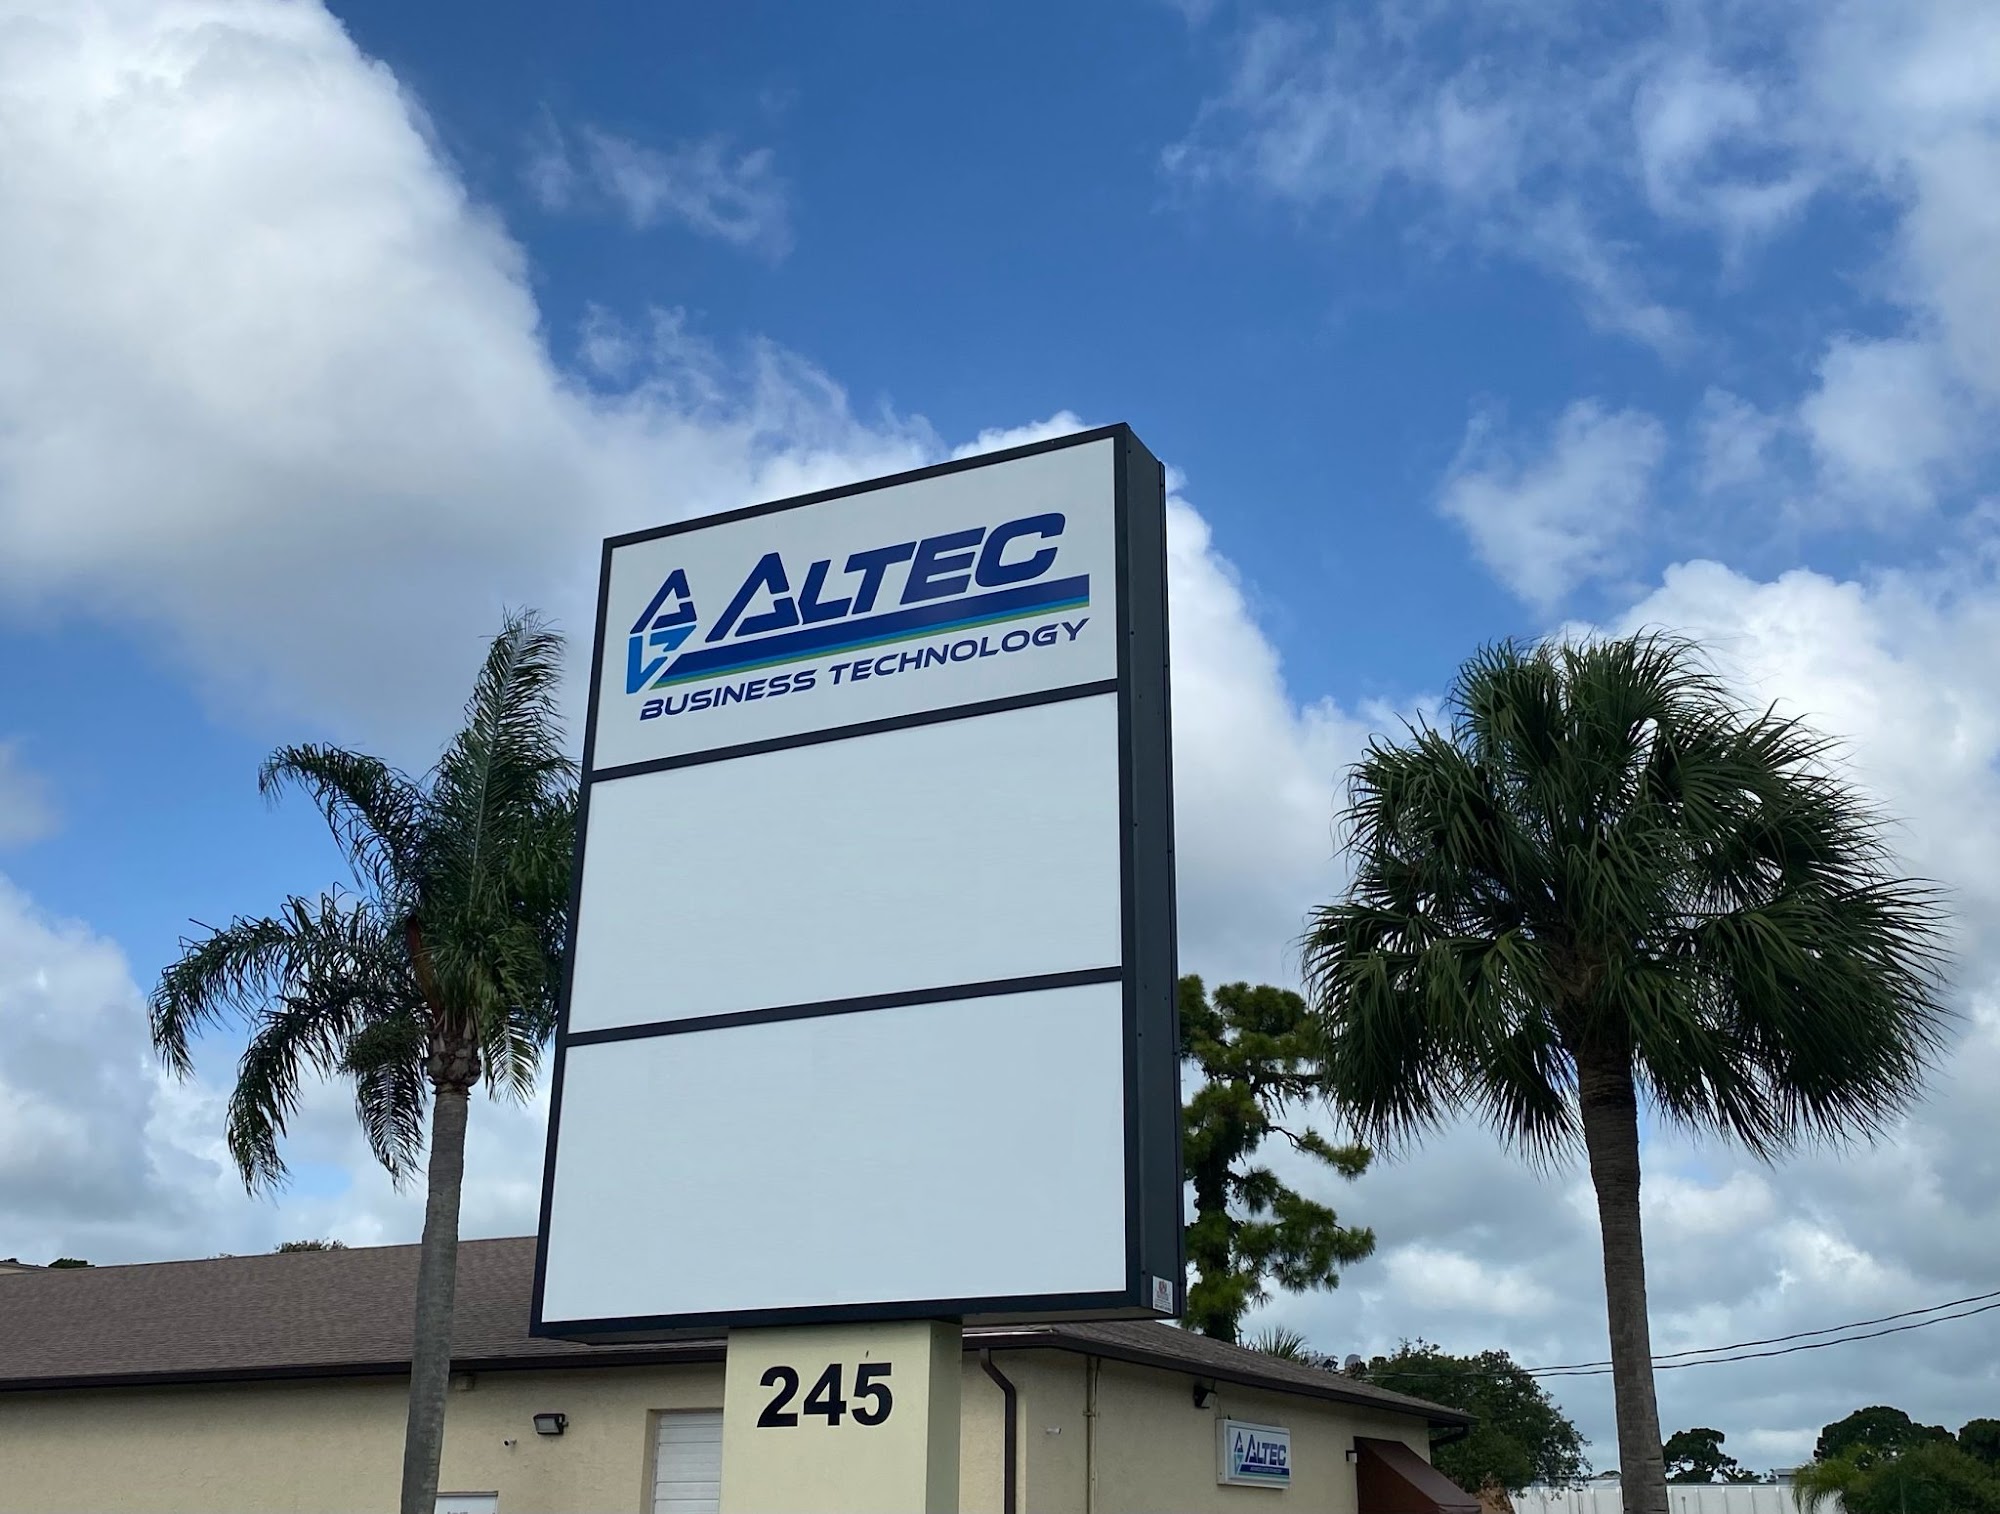 Altec Business Technology (Printers, Toners, & Computer Help)